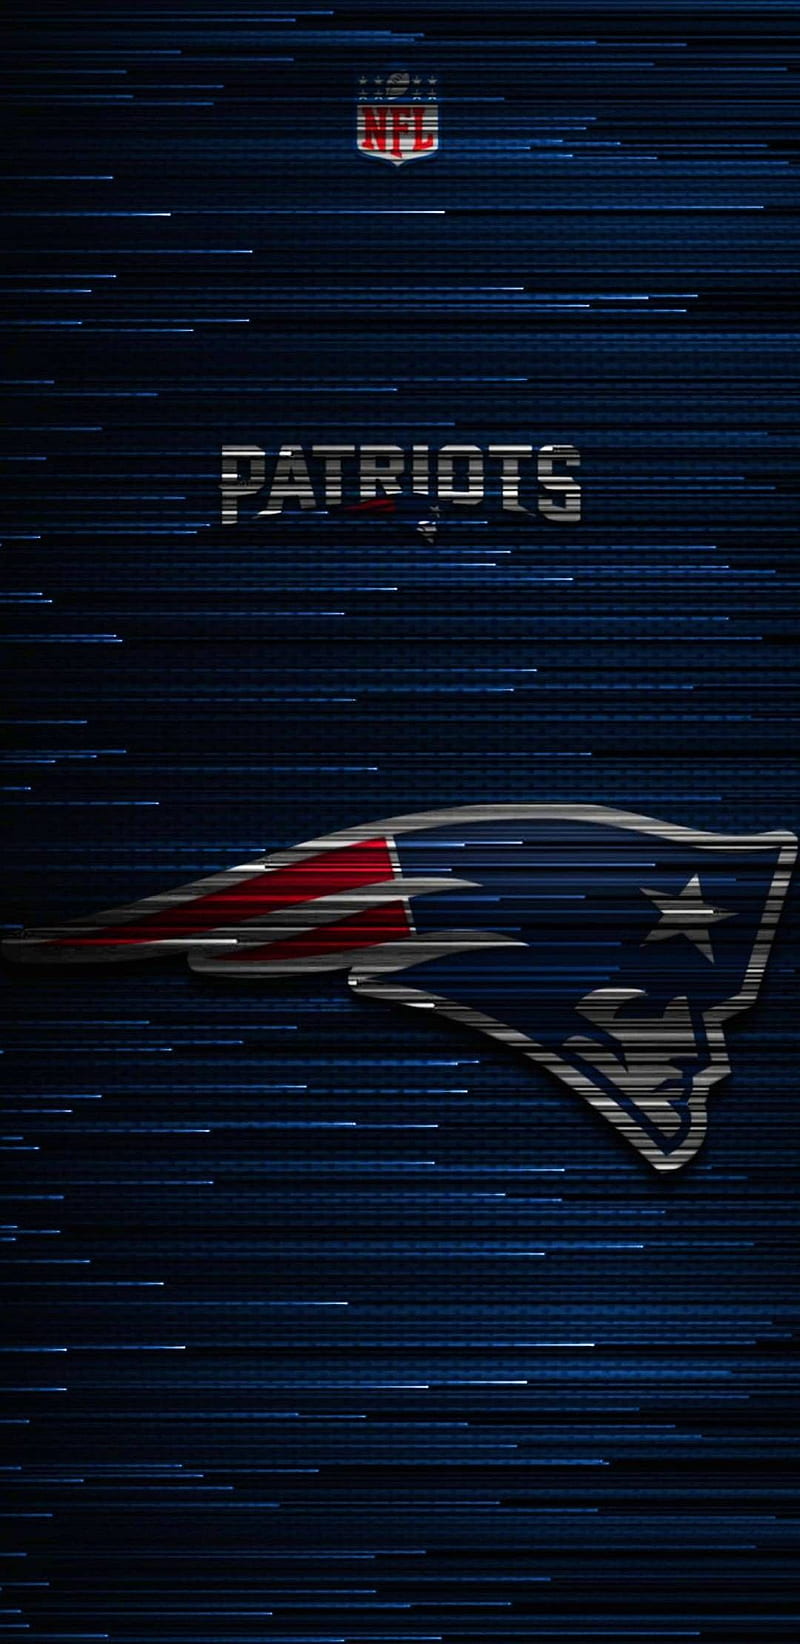 3D iPhone Wallpaper on Twitter New England Patriots iPhone 7 Wallpaper  httpstco48VHXlGCOi httpstcoTpPxizSCDb  Twitter